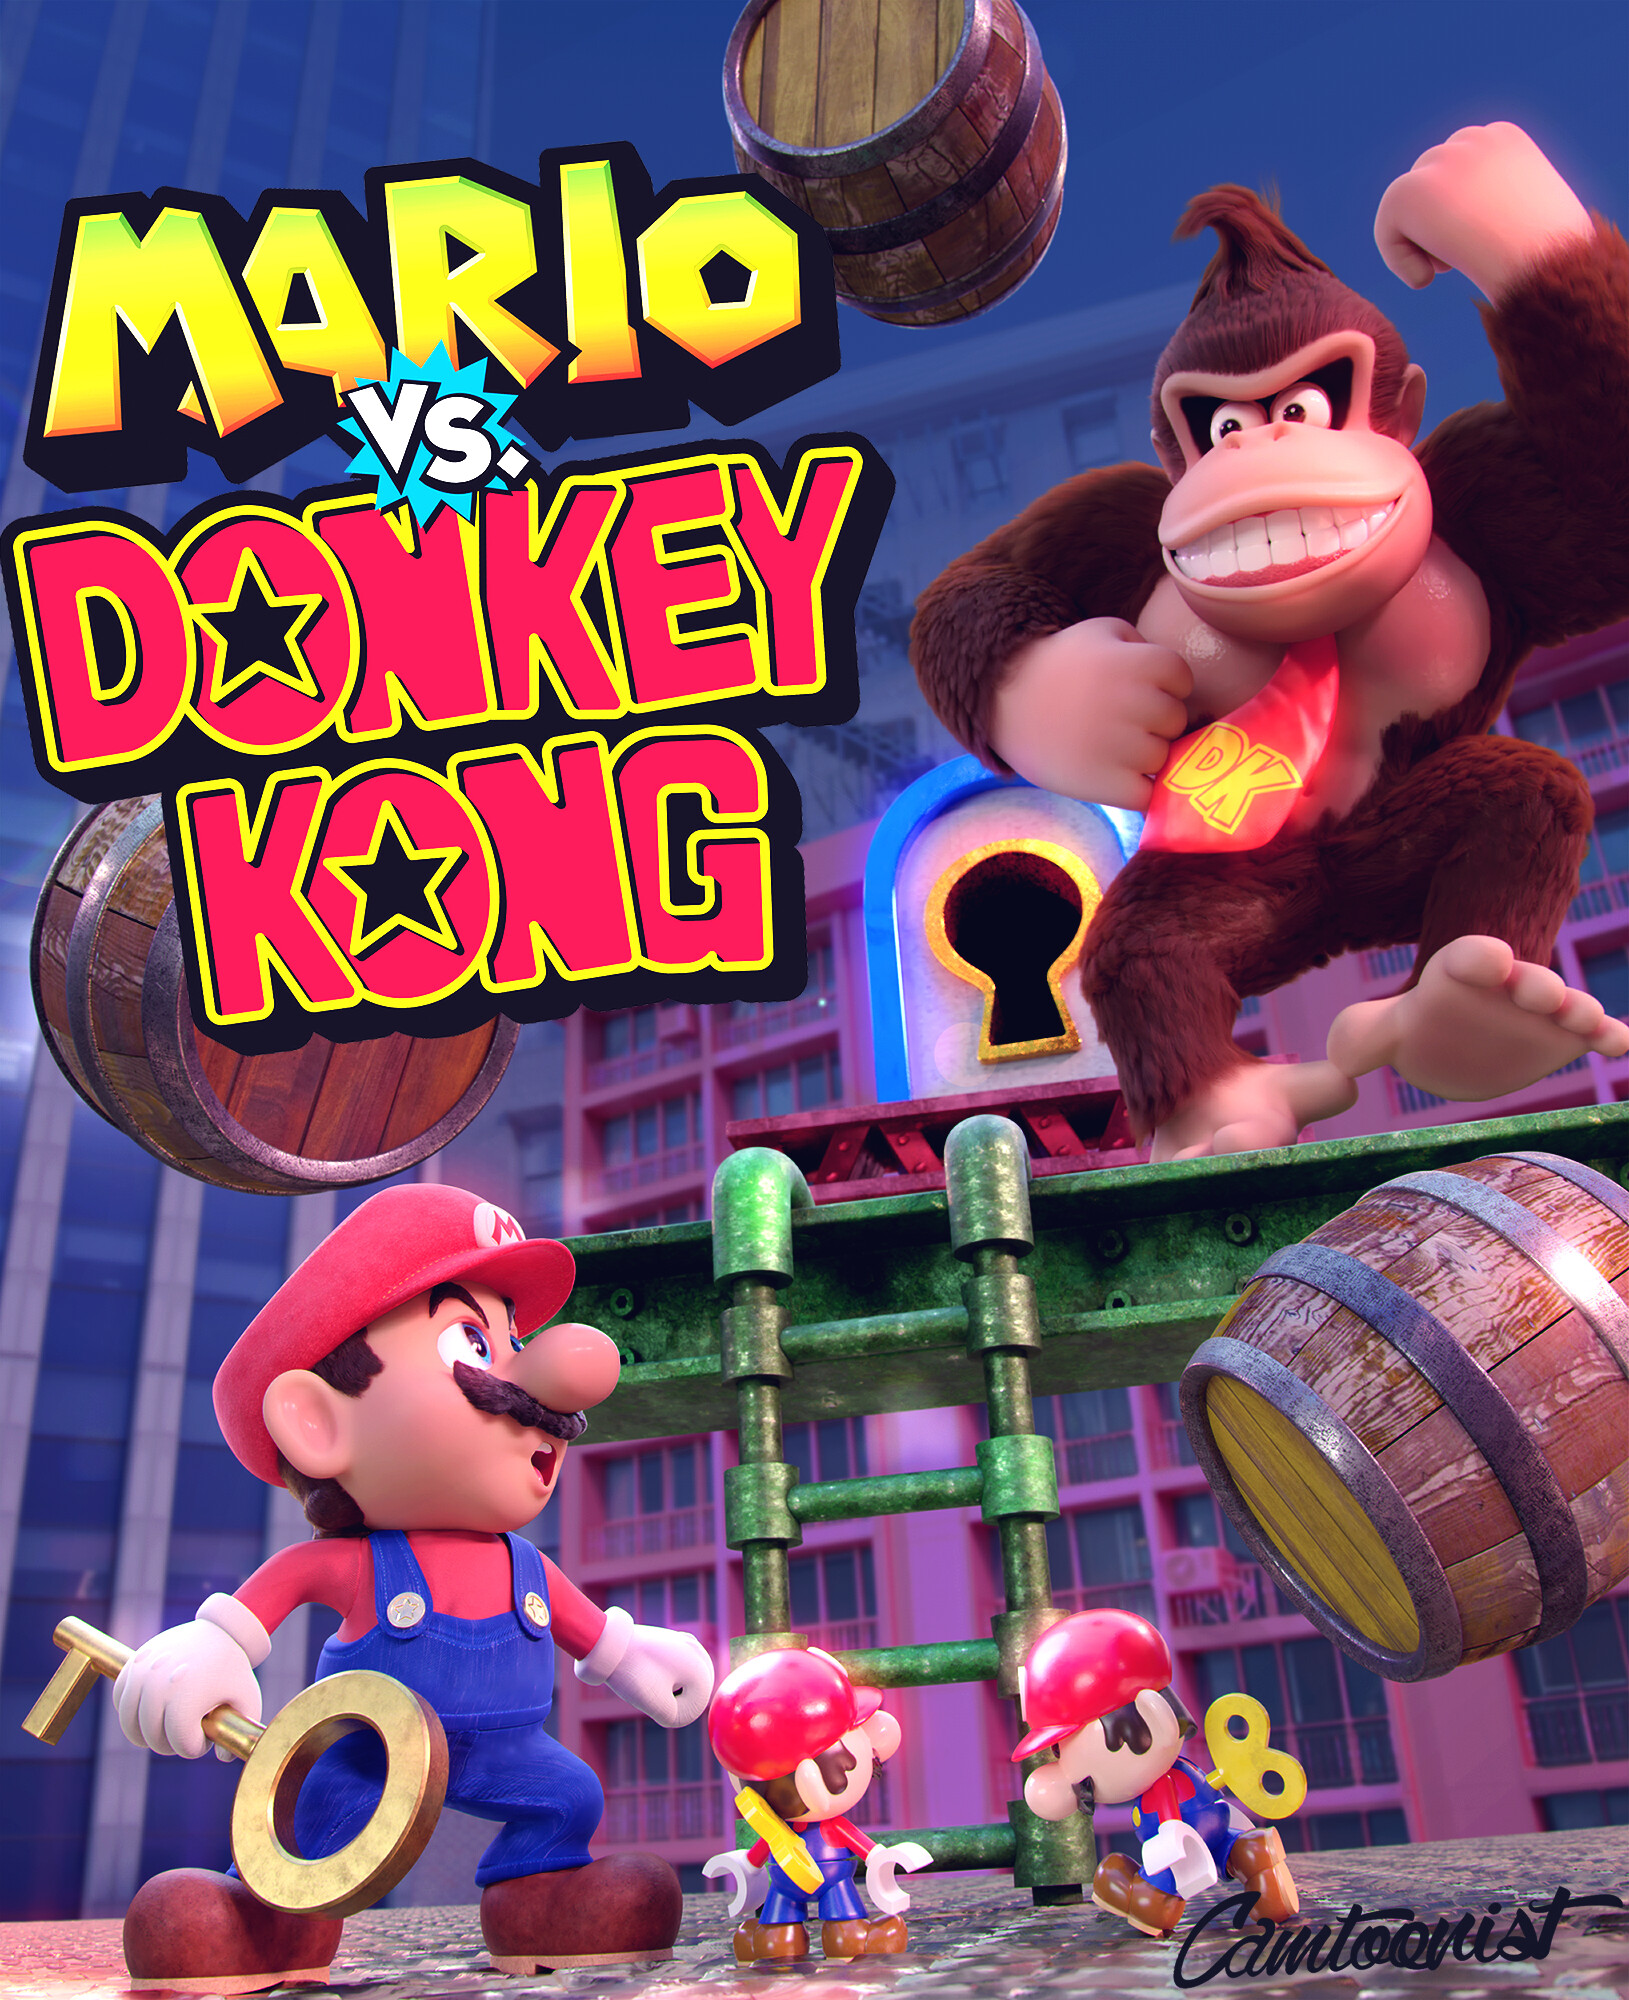 Mario vs. Donkey Kong Box Art Recreation Finished Projects Blender